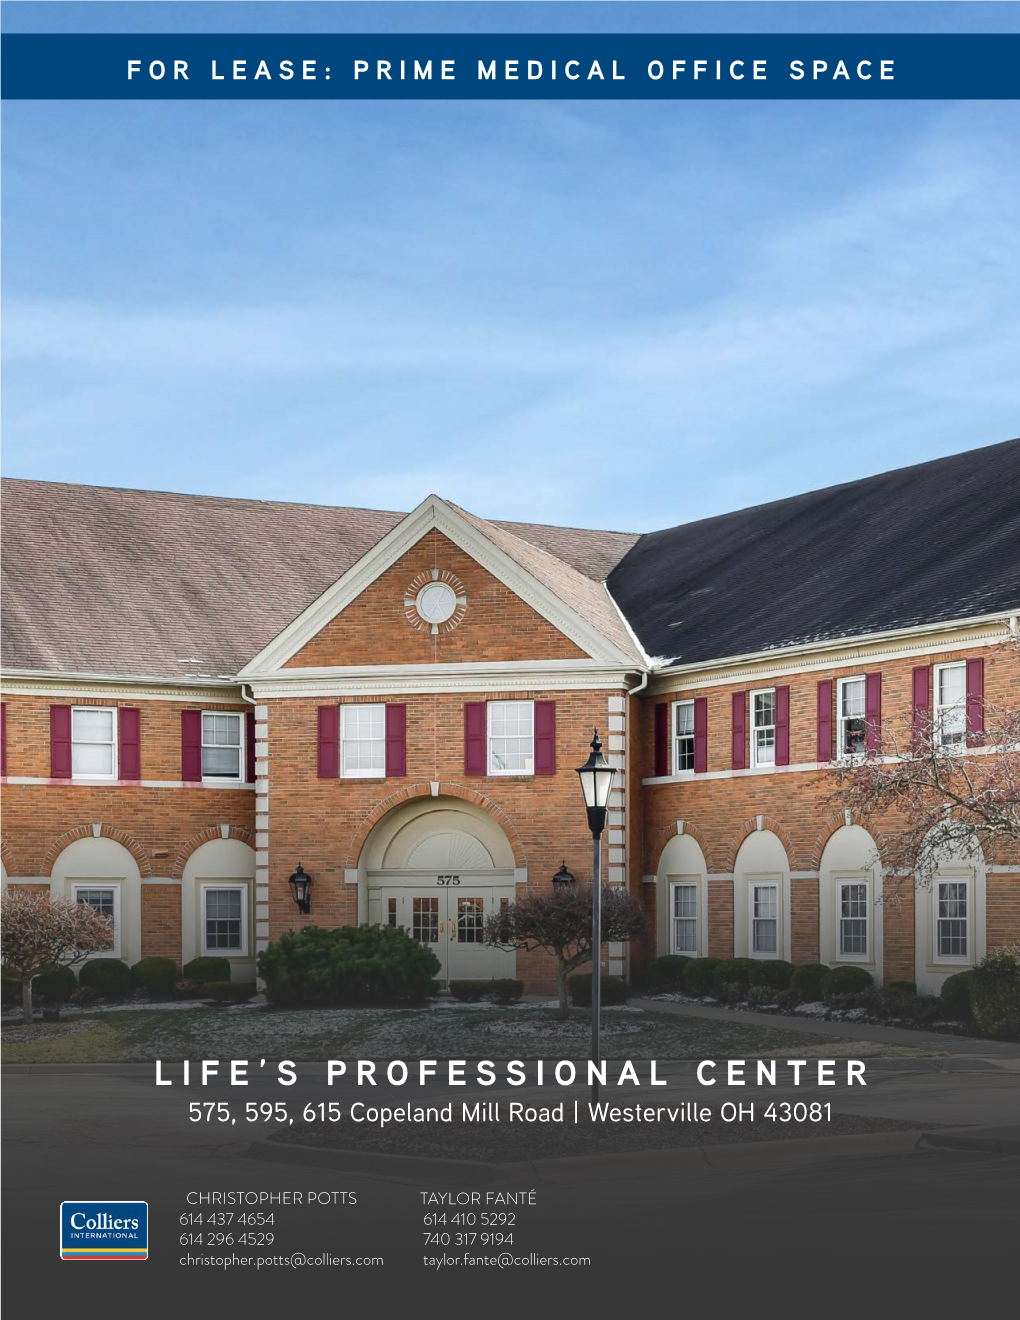 Life's Professional Center